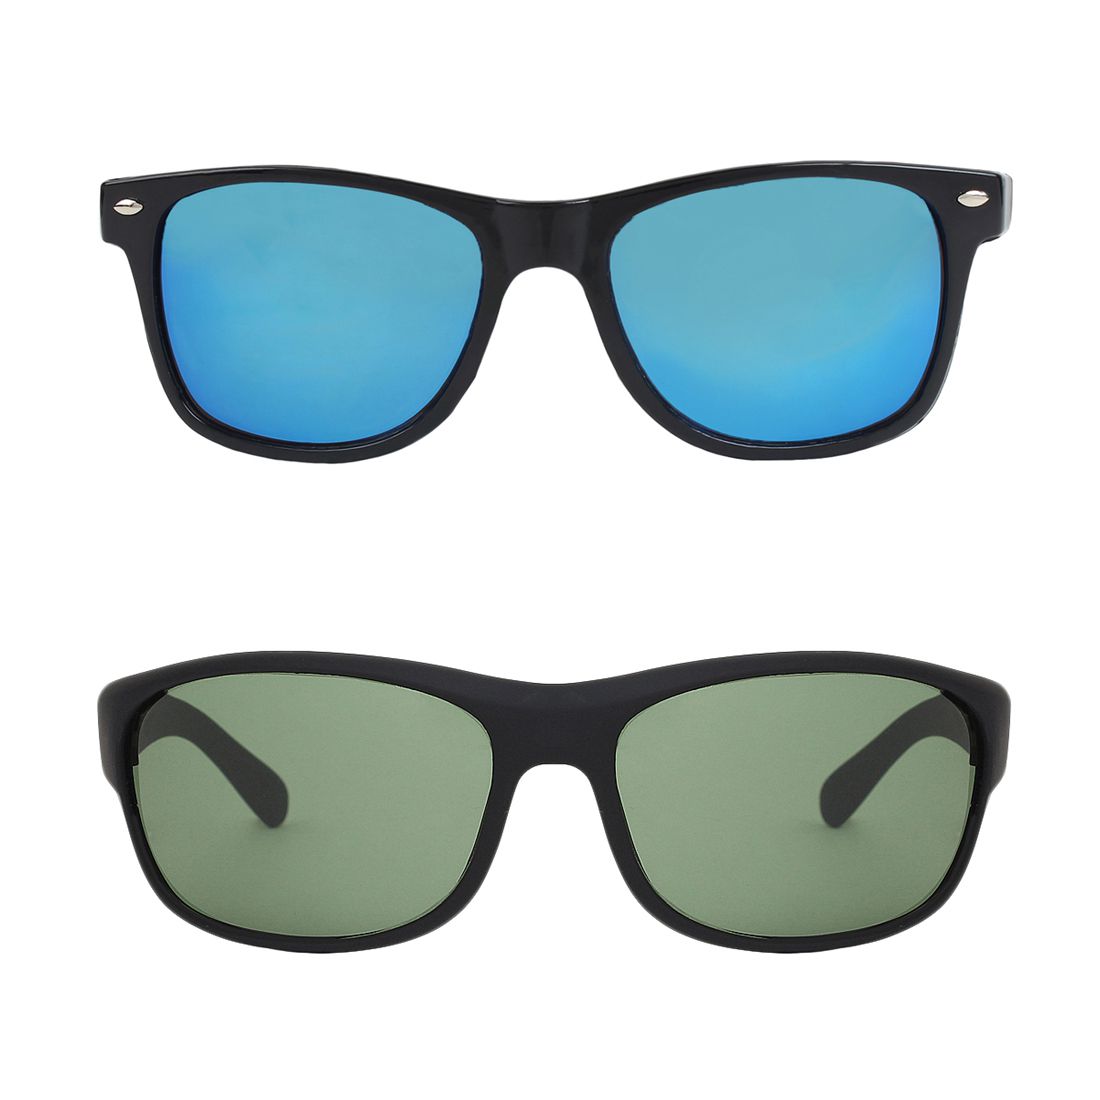 Abner Sunglasses Combo ( 2 pairs of sunglasses ) - Buy Abner Sunglasses ...